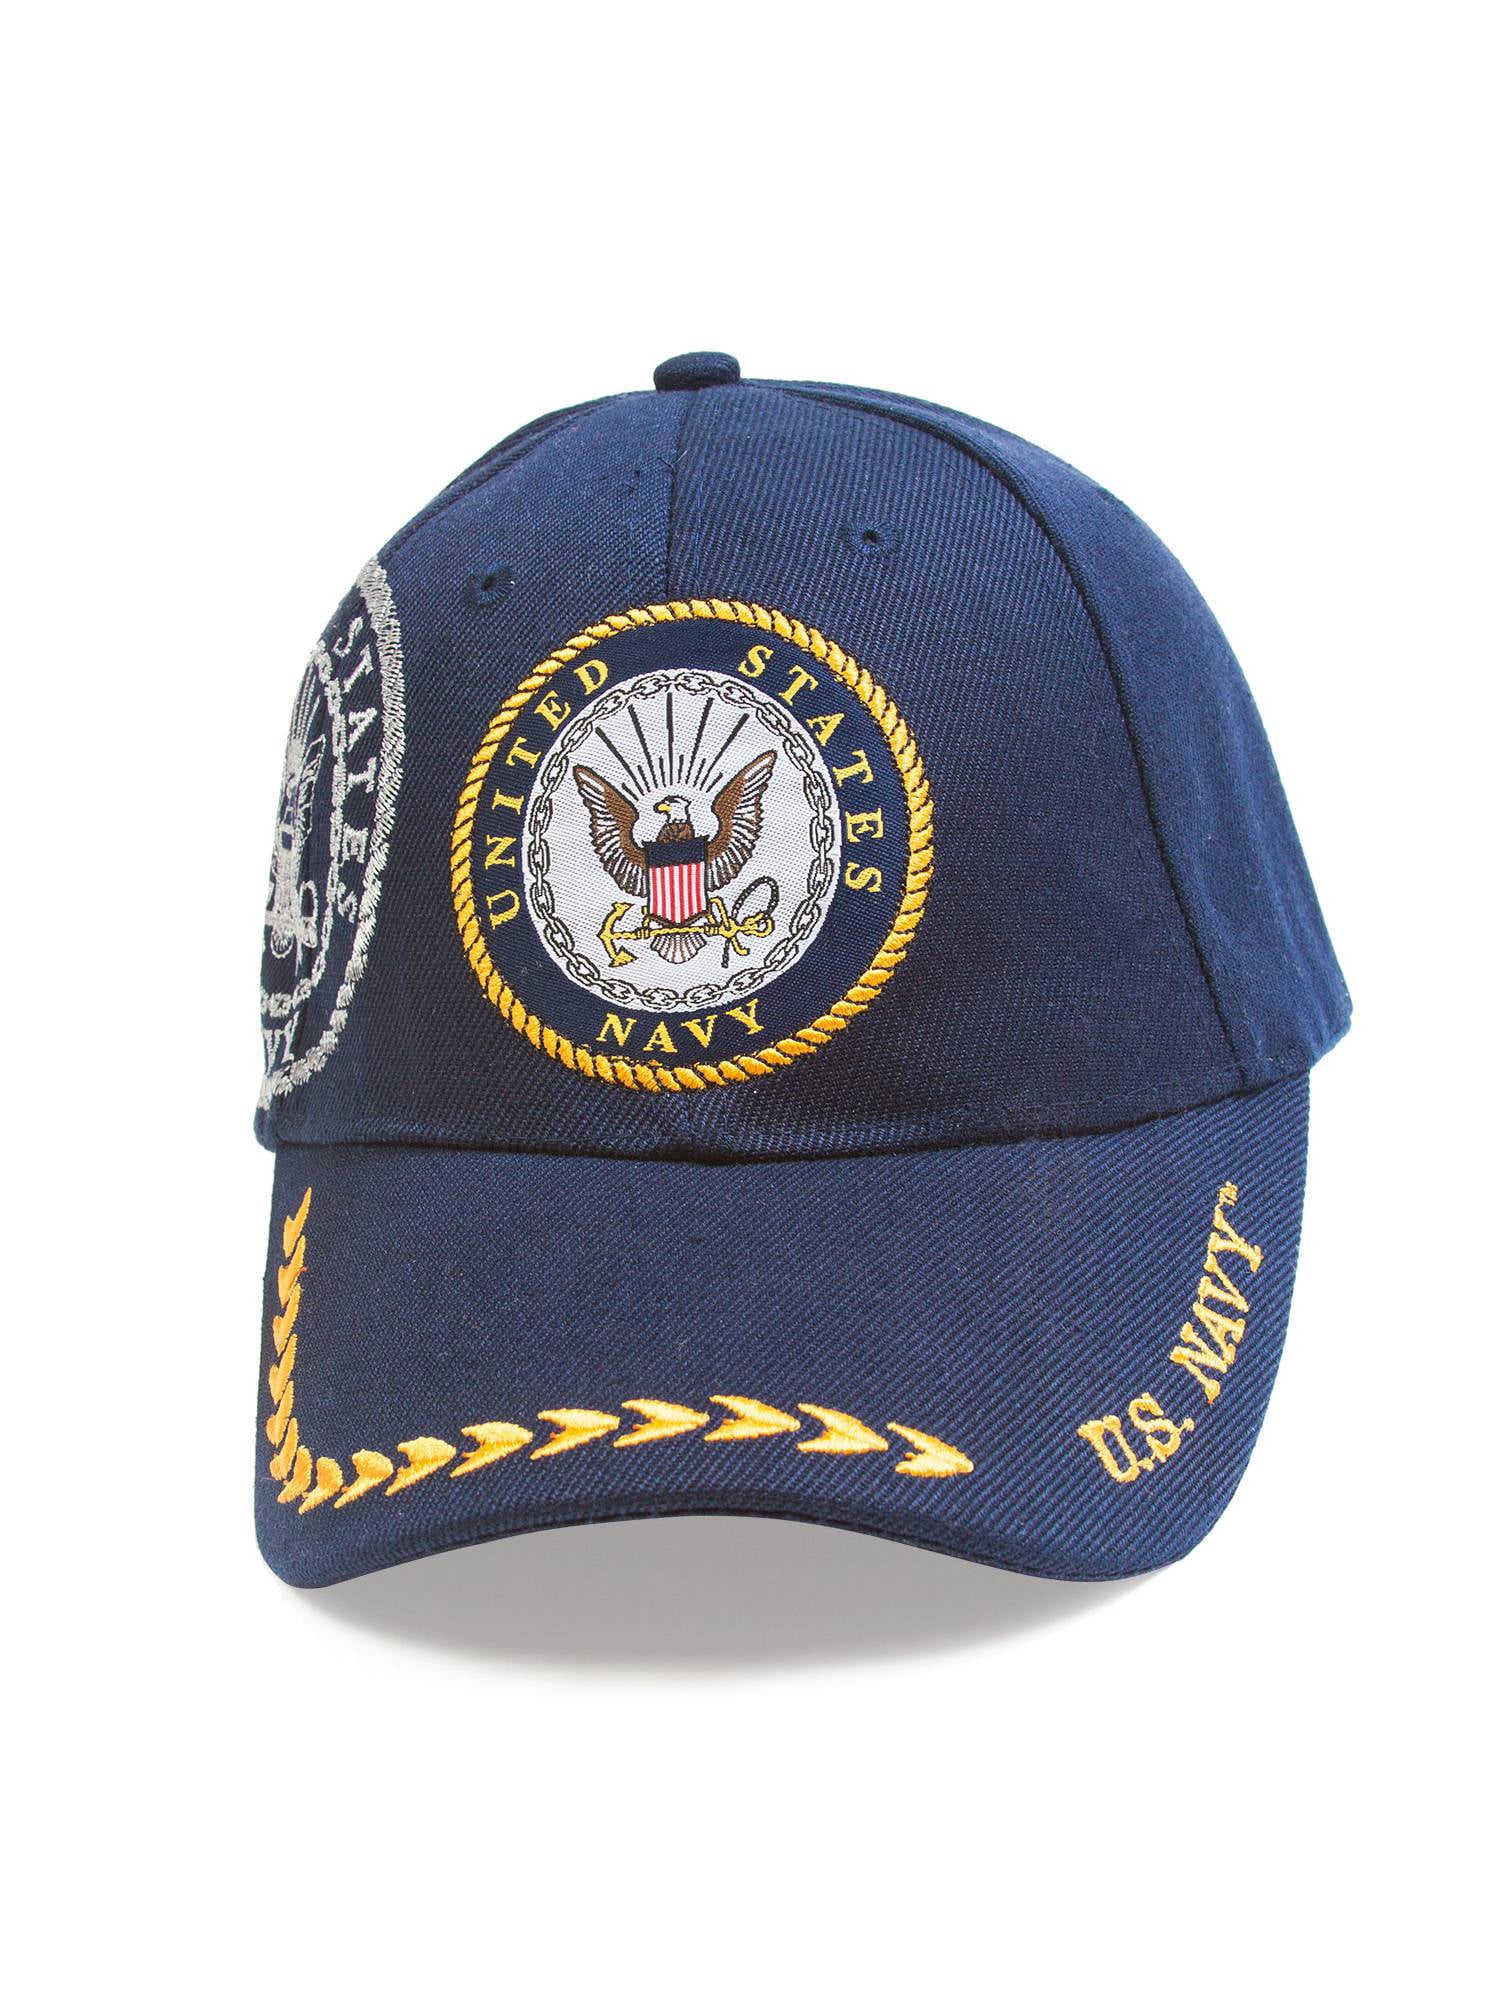 Kappe Official Product by U.S.Navy Neu  Army Shop Navy Digital US Navy Cap 